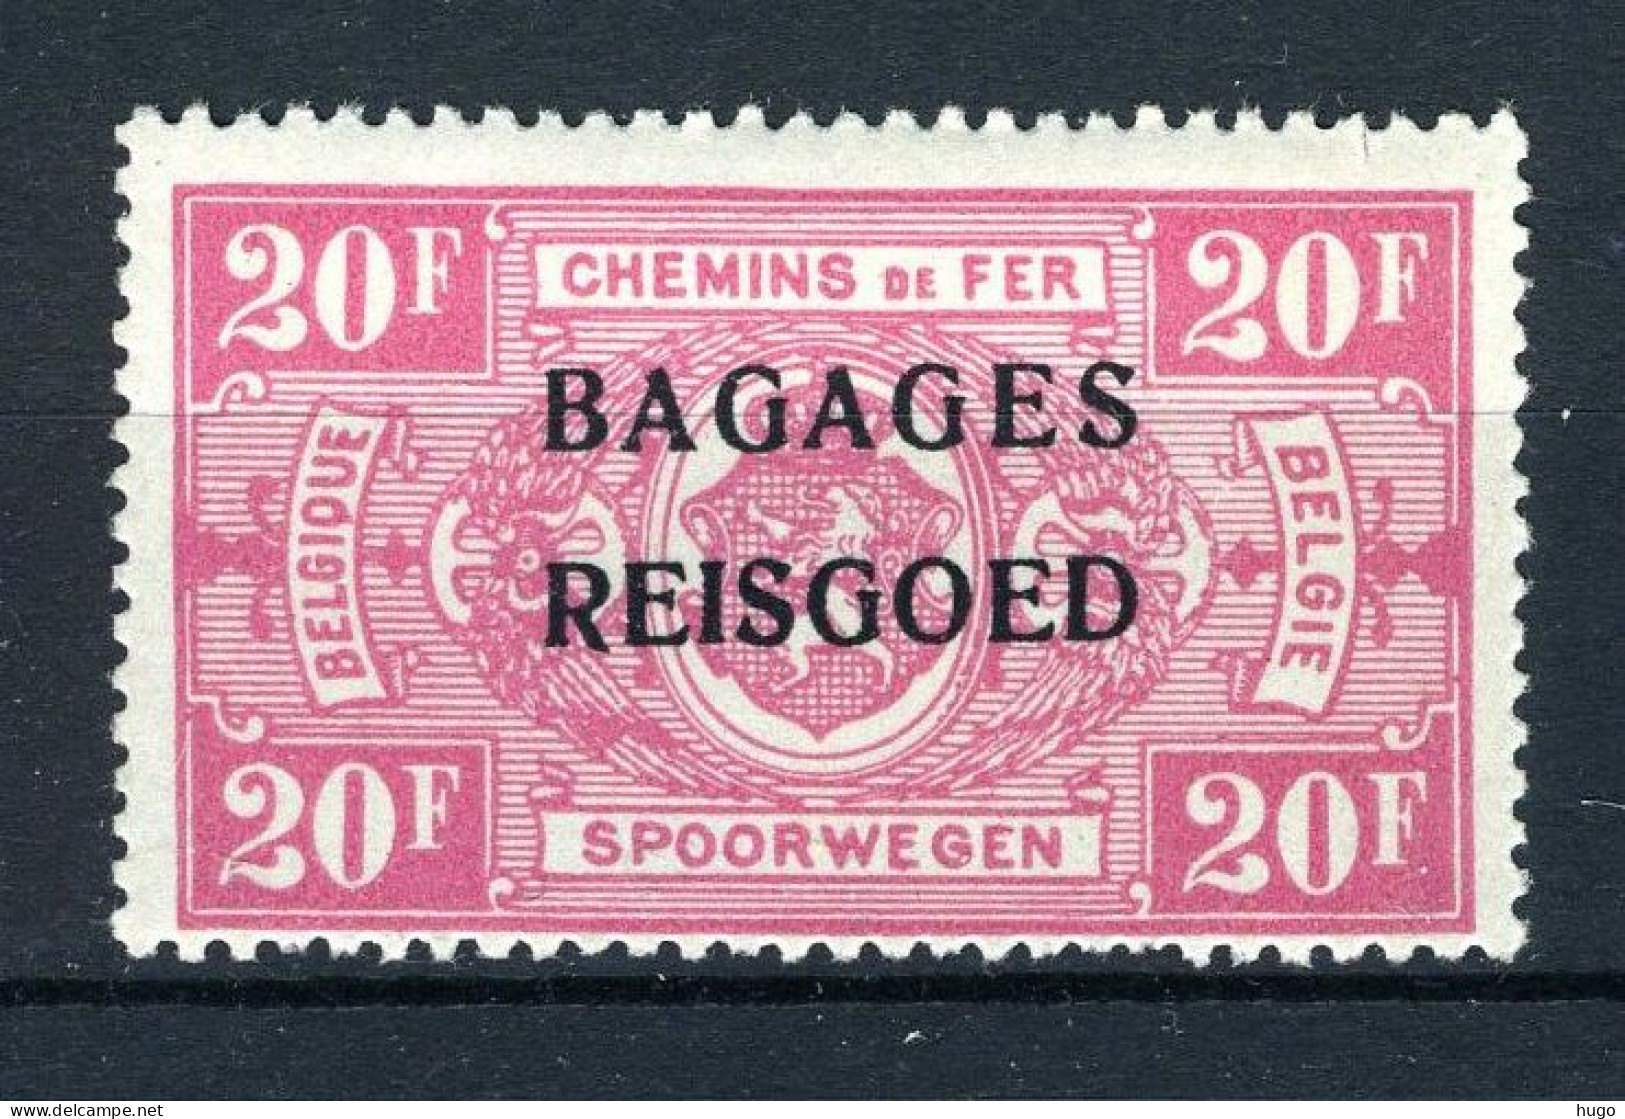 BA20 MNH** 1935 - Spoorwegzegels Met Opdruk "BAGAGES - REISGOED" - Sot  - Bagages [BA]